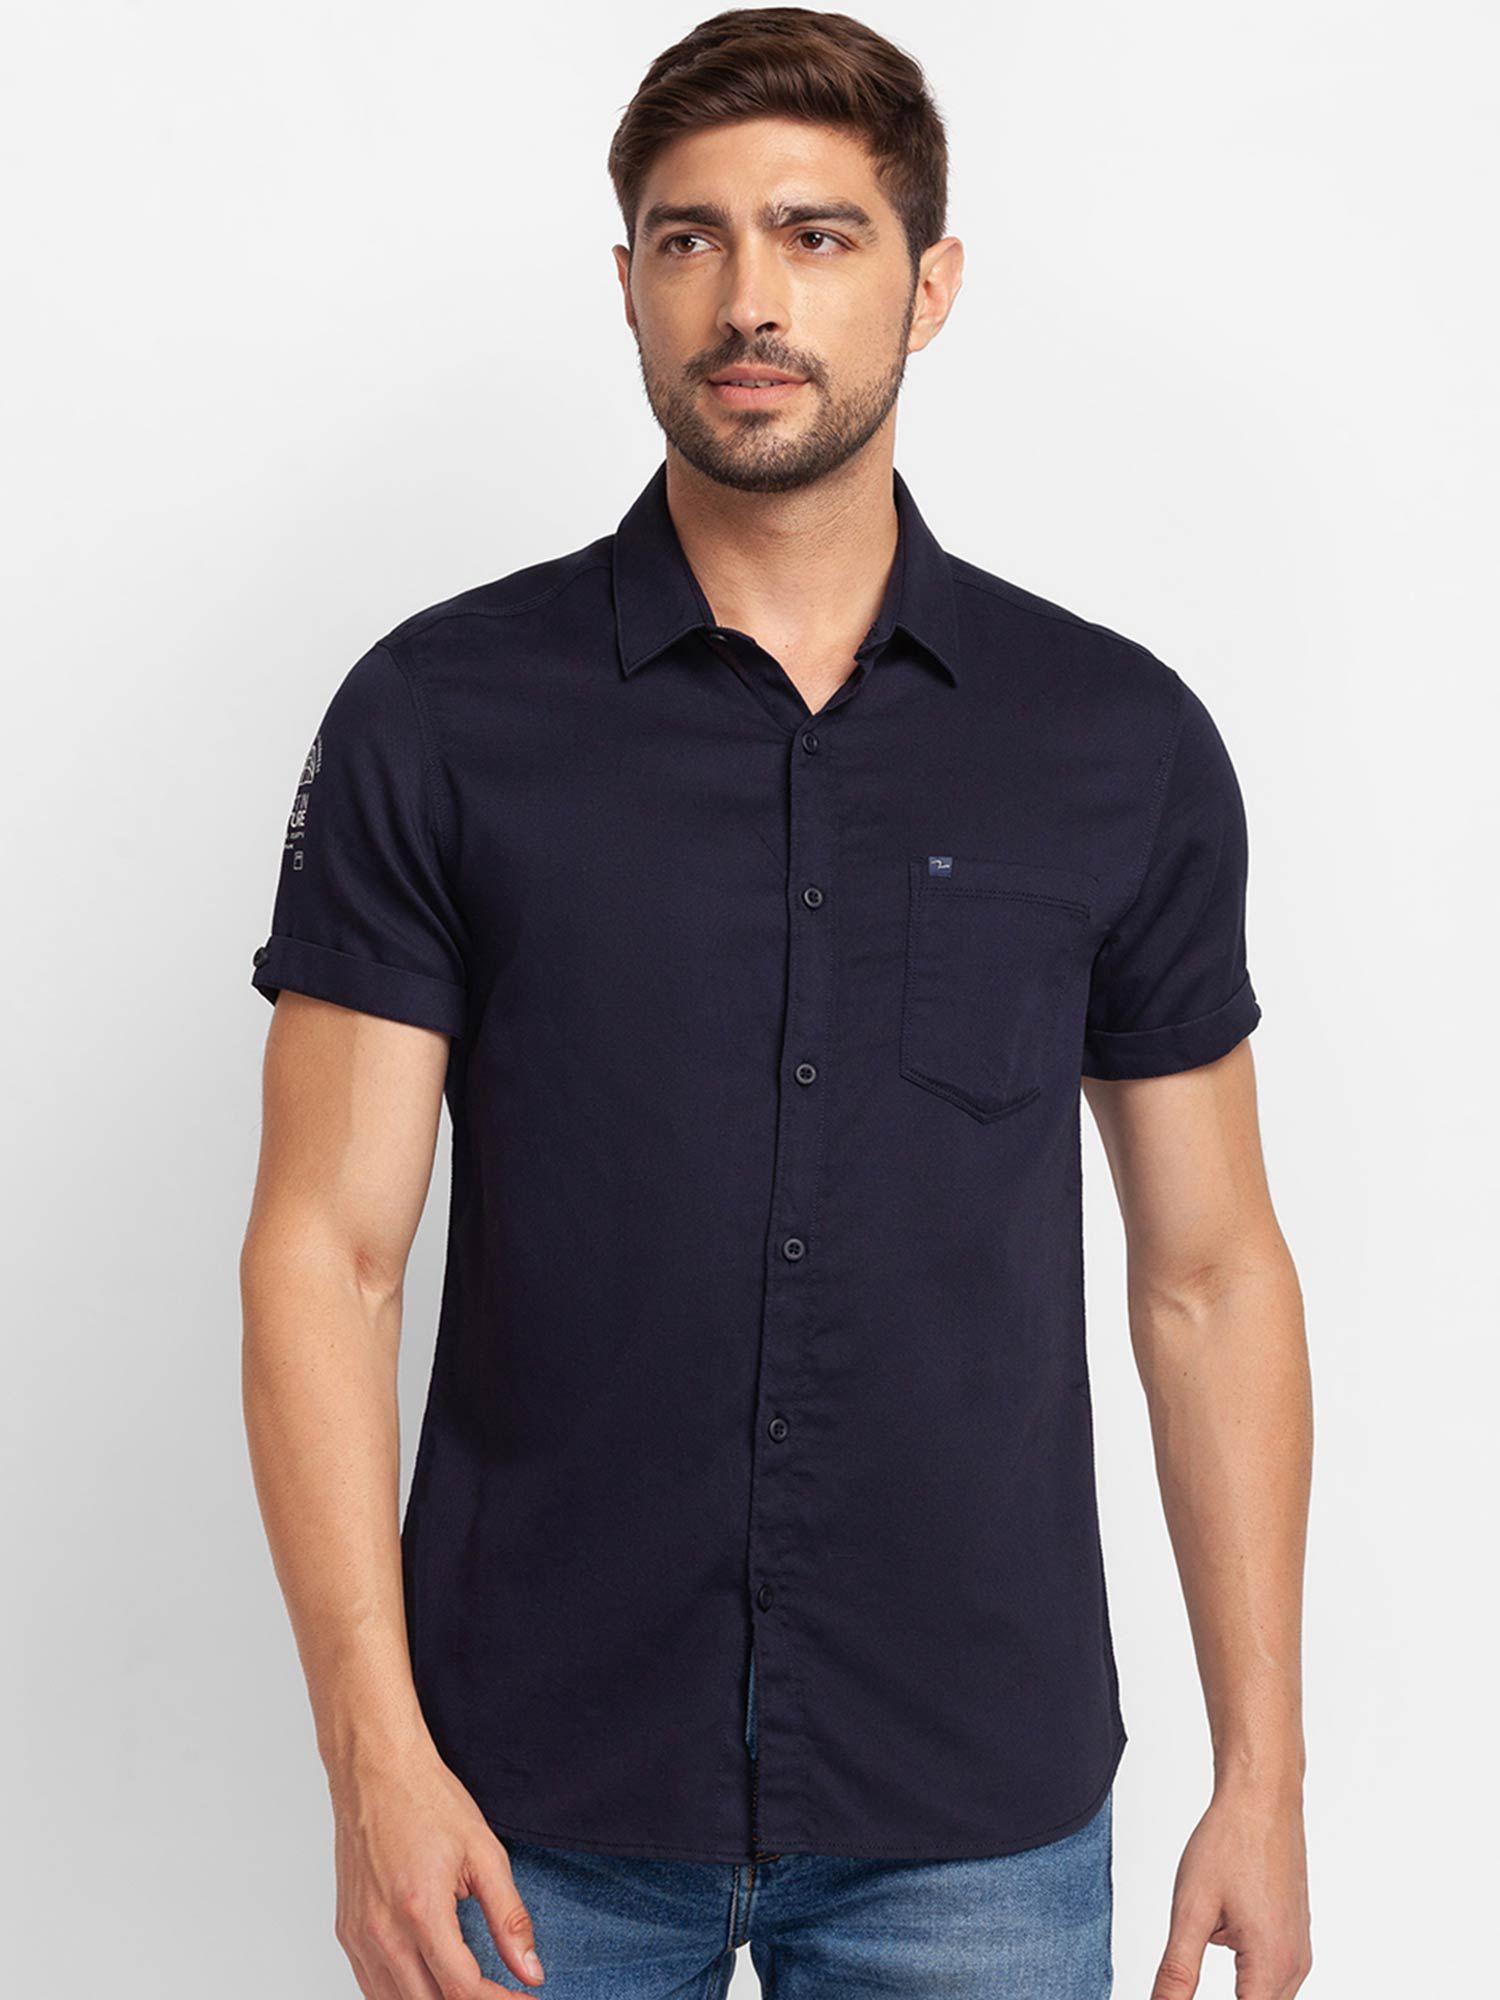 navy blue cotton half sleeve plain shirt for men